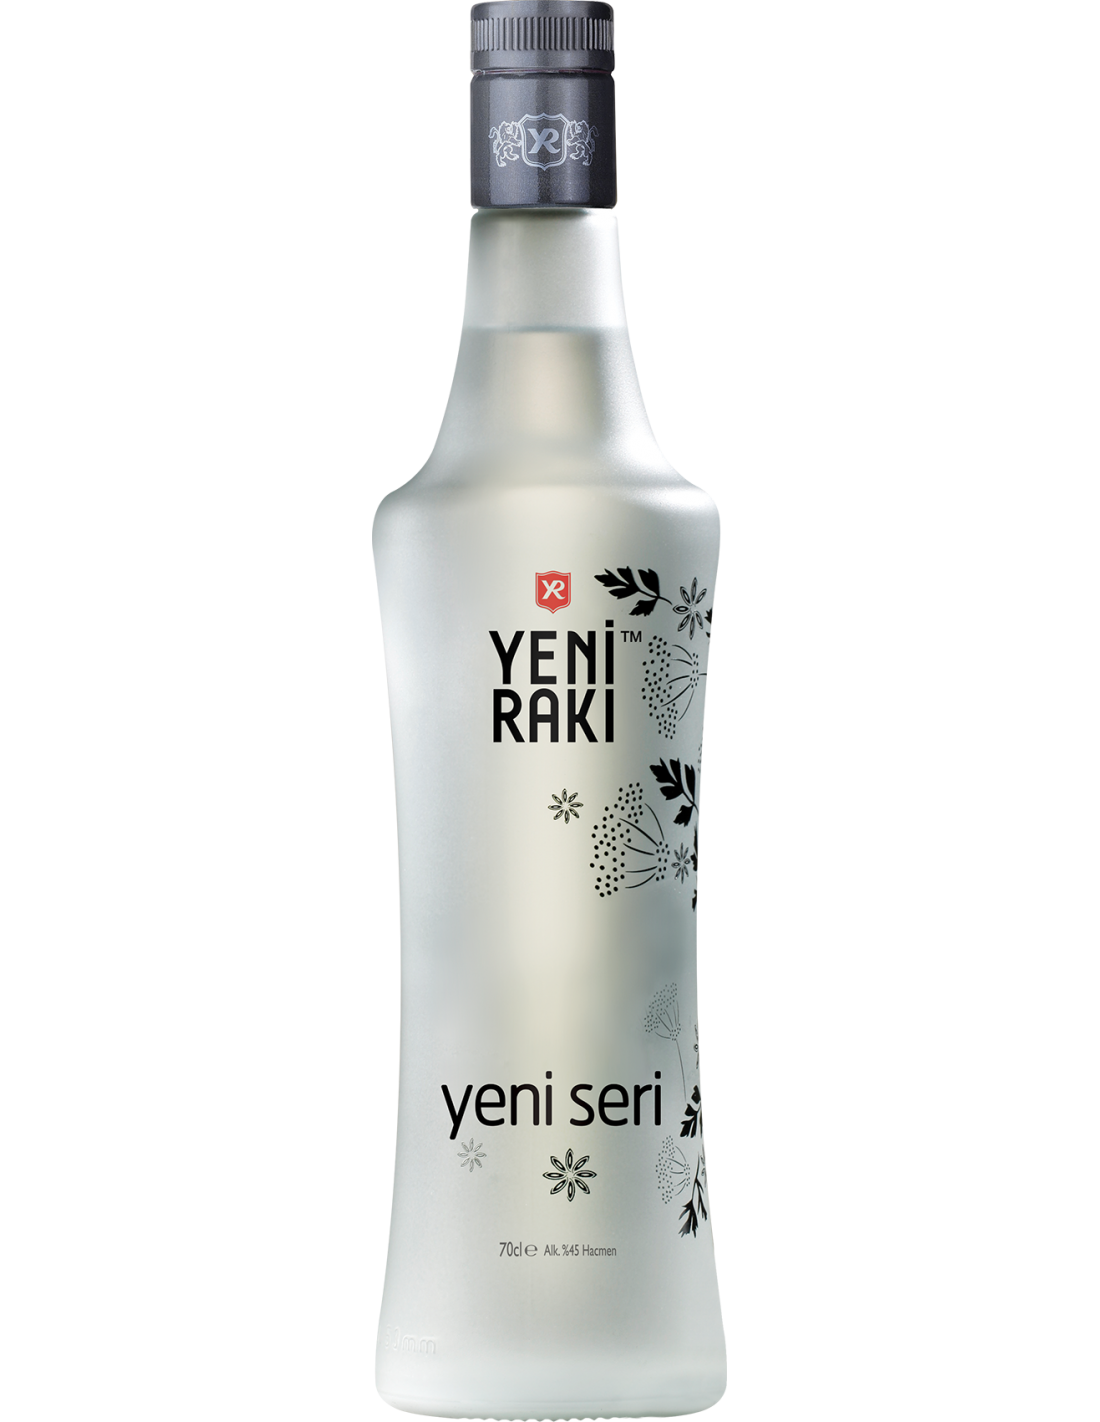 Bautura traditionala Yeni Raki Seri, 45% alc., 0.7L, Turcia alcooldiscount.ro